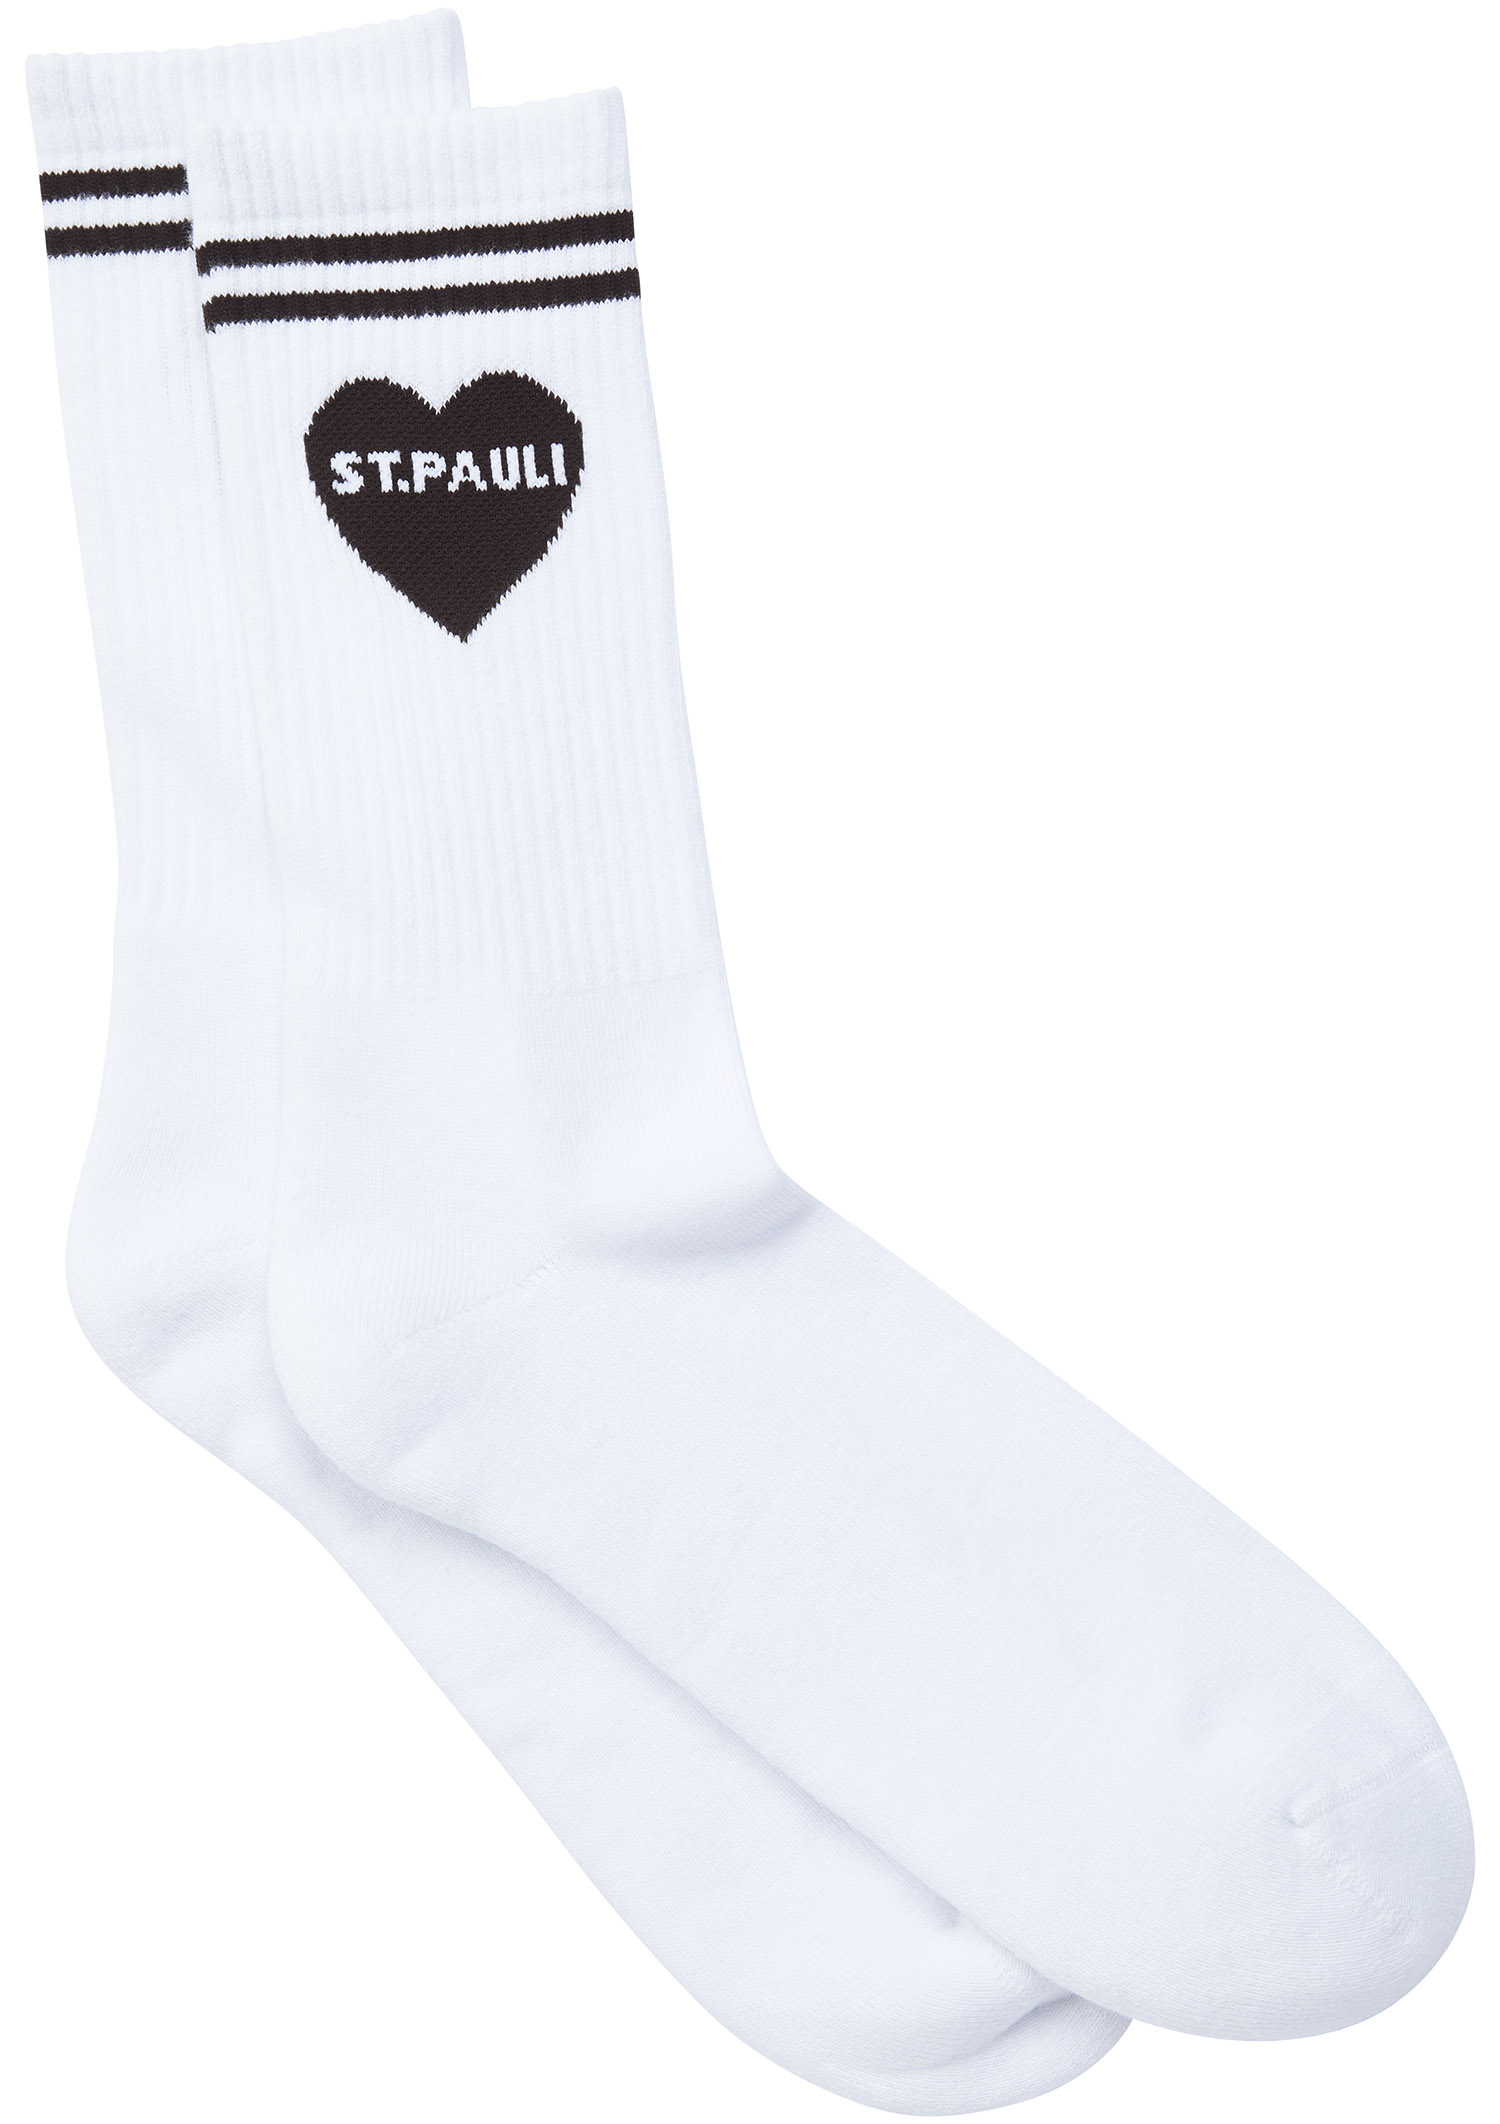 Socks "St. Pauli Heart" - black